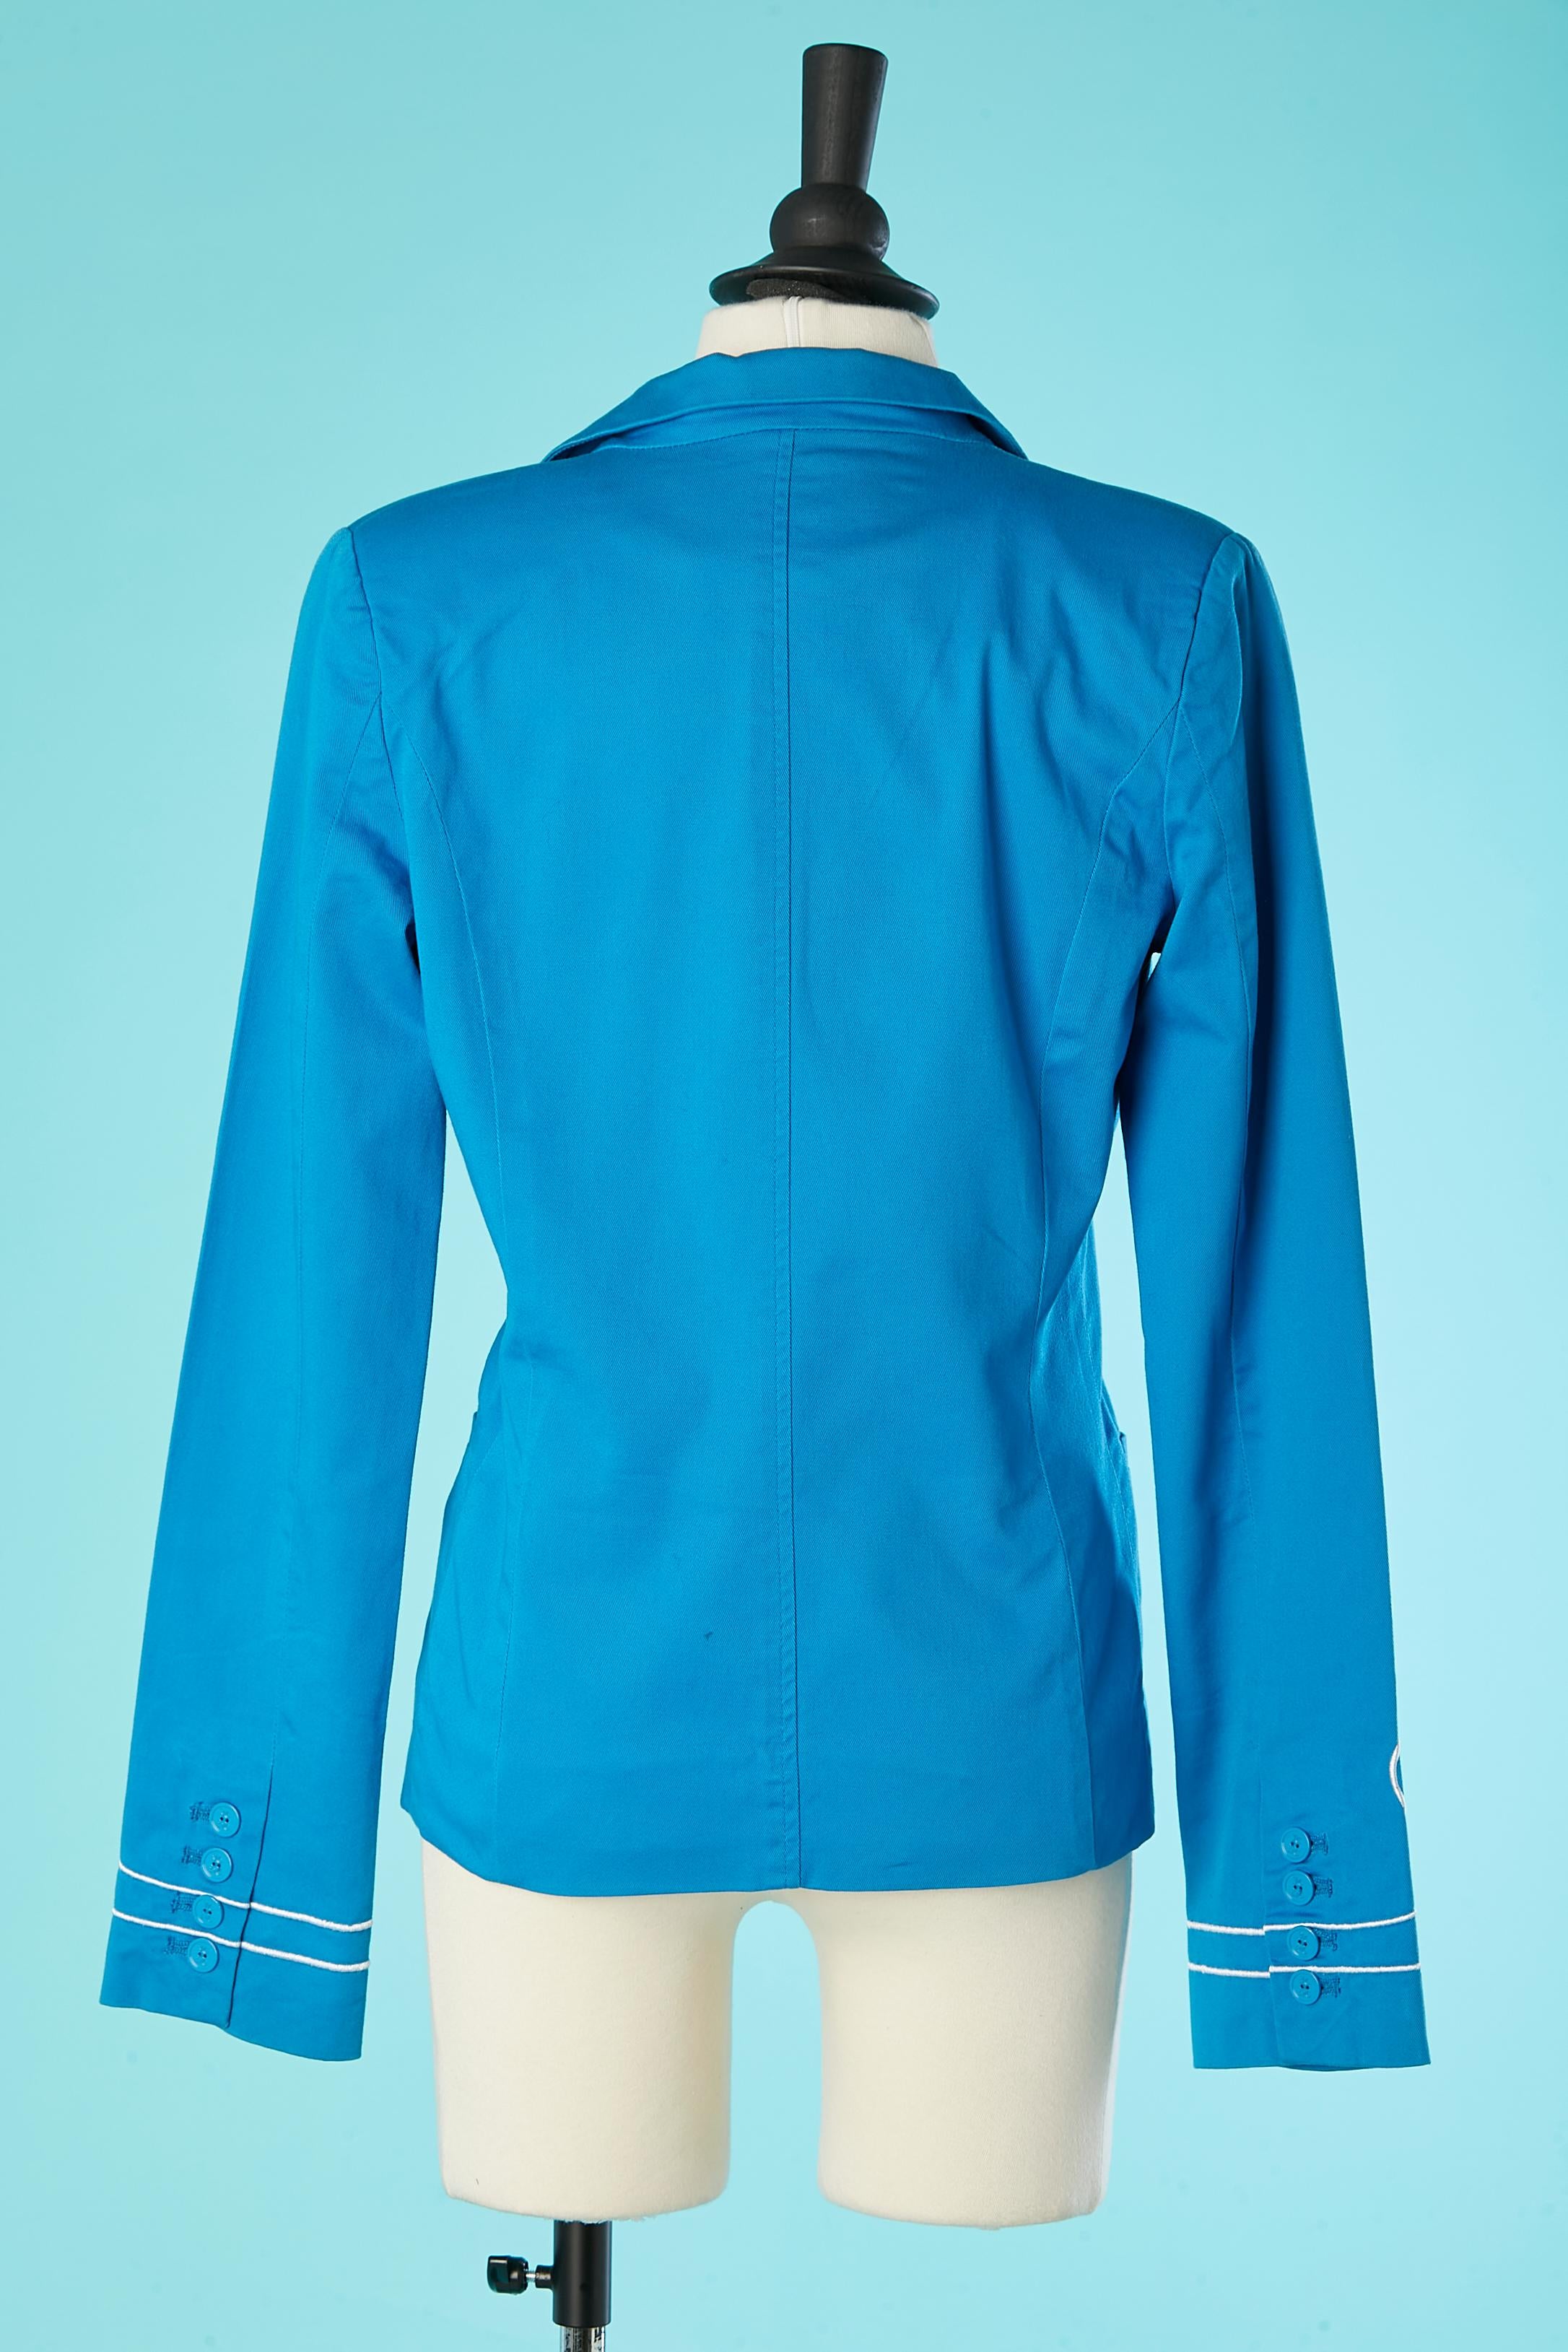 Blue cotton jacket with a white heart collar JC/DC (Jean-Charles de Castelbajac) For Sale 2